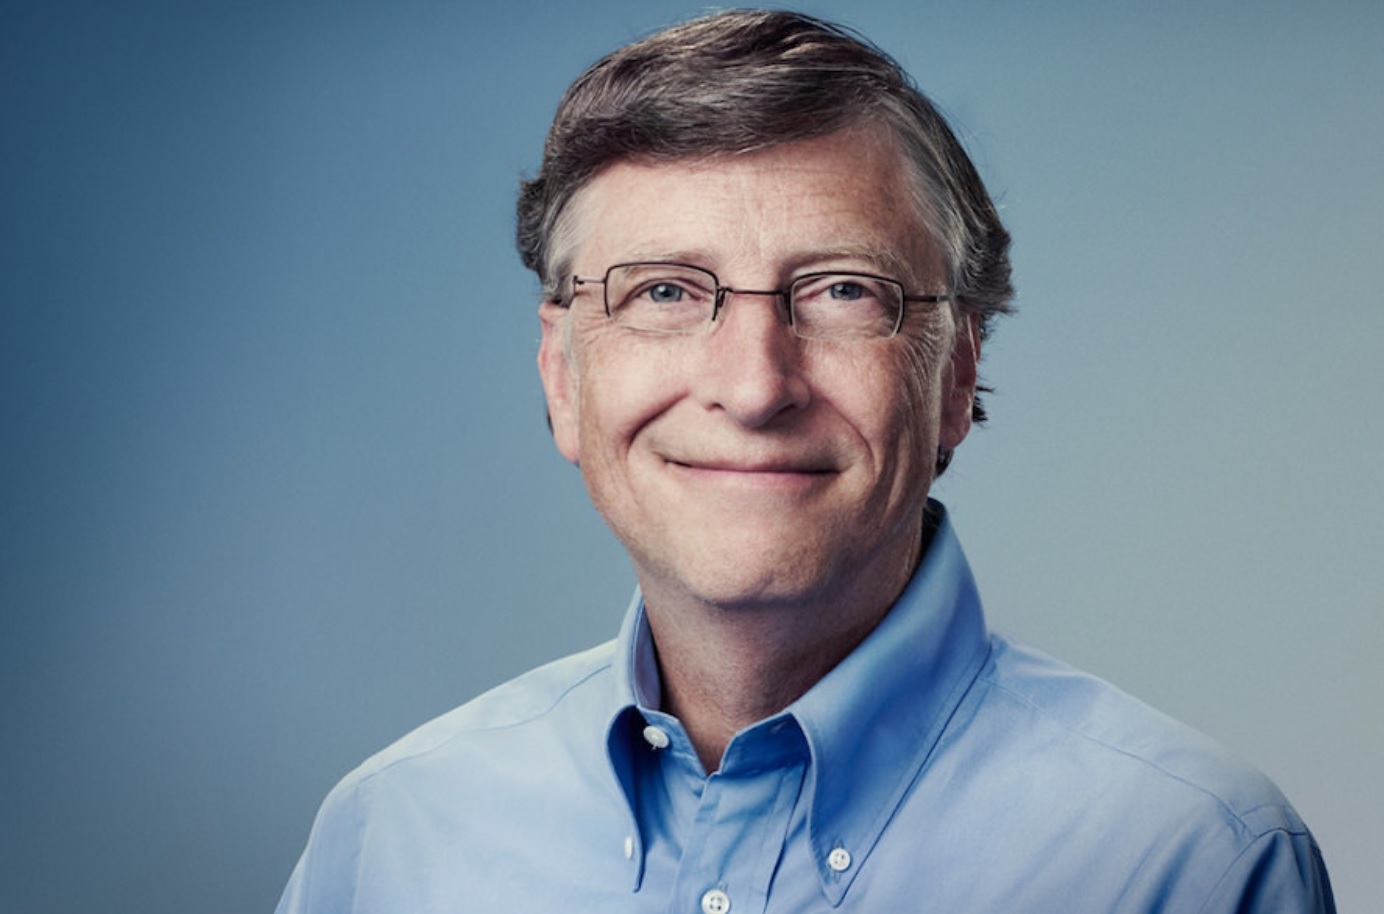 Microsoft co-founder Bill Gates leaves board